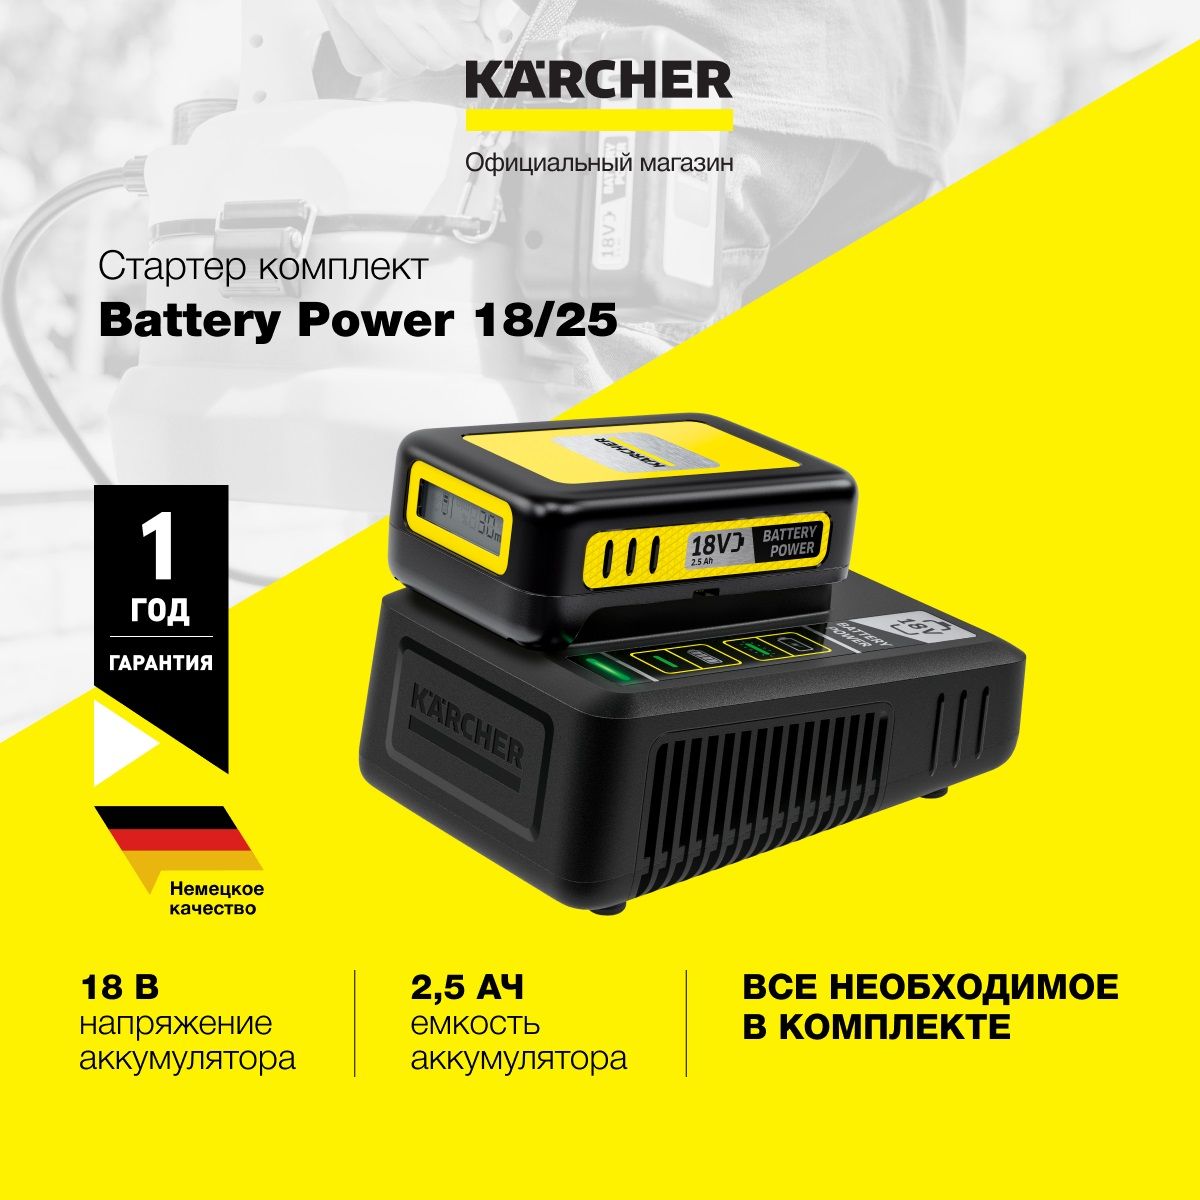 Karcher battery power. Kärcher Battery Battery Power 18/50 аккумулятор. Kärcher Battery Battery Power 18/25 аккумулятор. Karcher KHB 6 Battery Set. Karcher KHB 6 Battery Set 1.328-110.0.